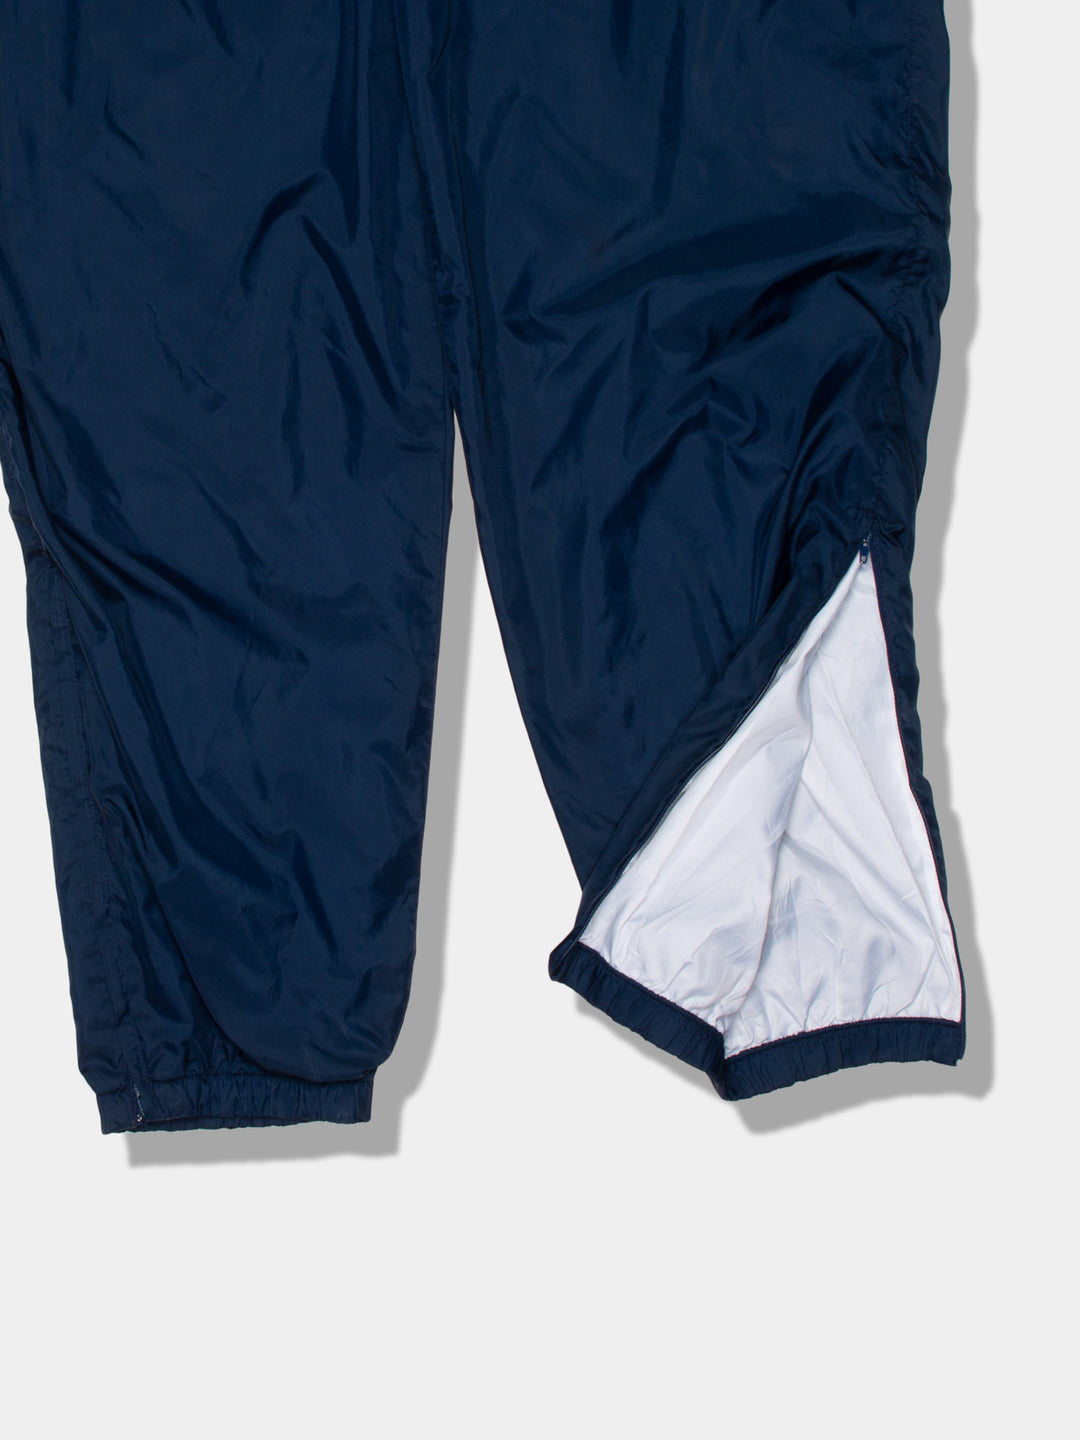 Vintage Nike Track Pants (XL)